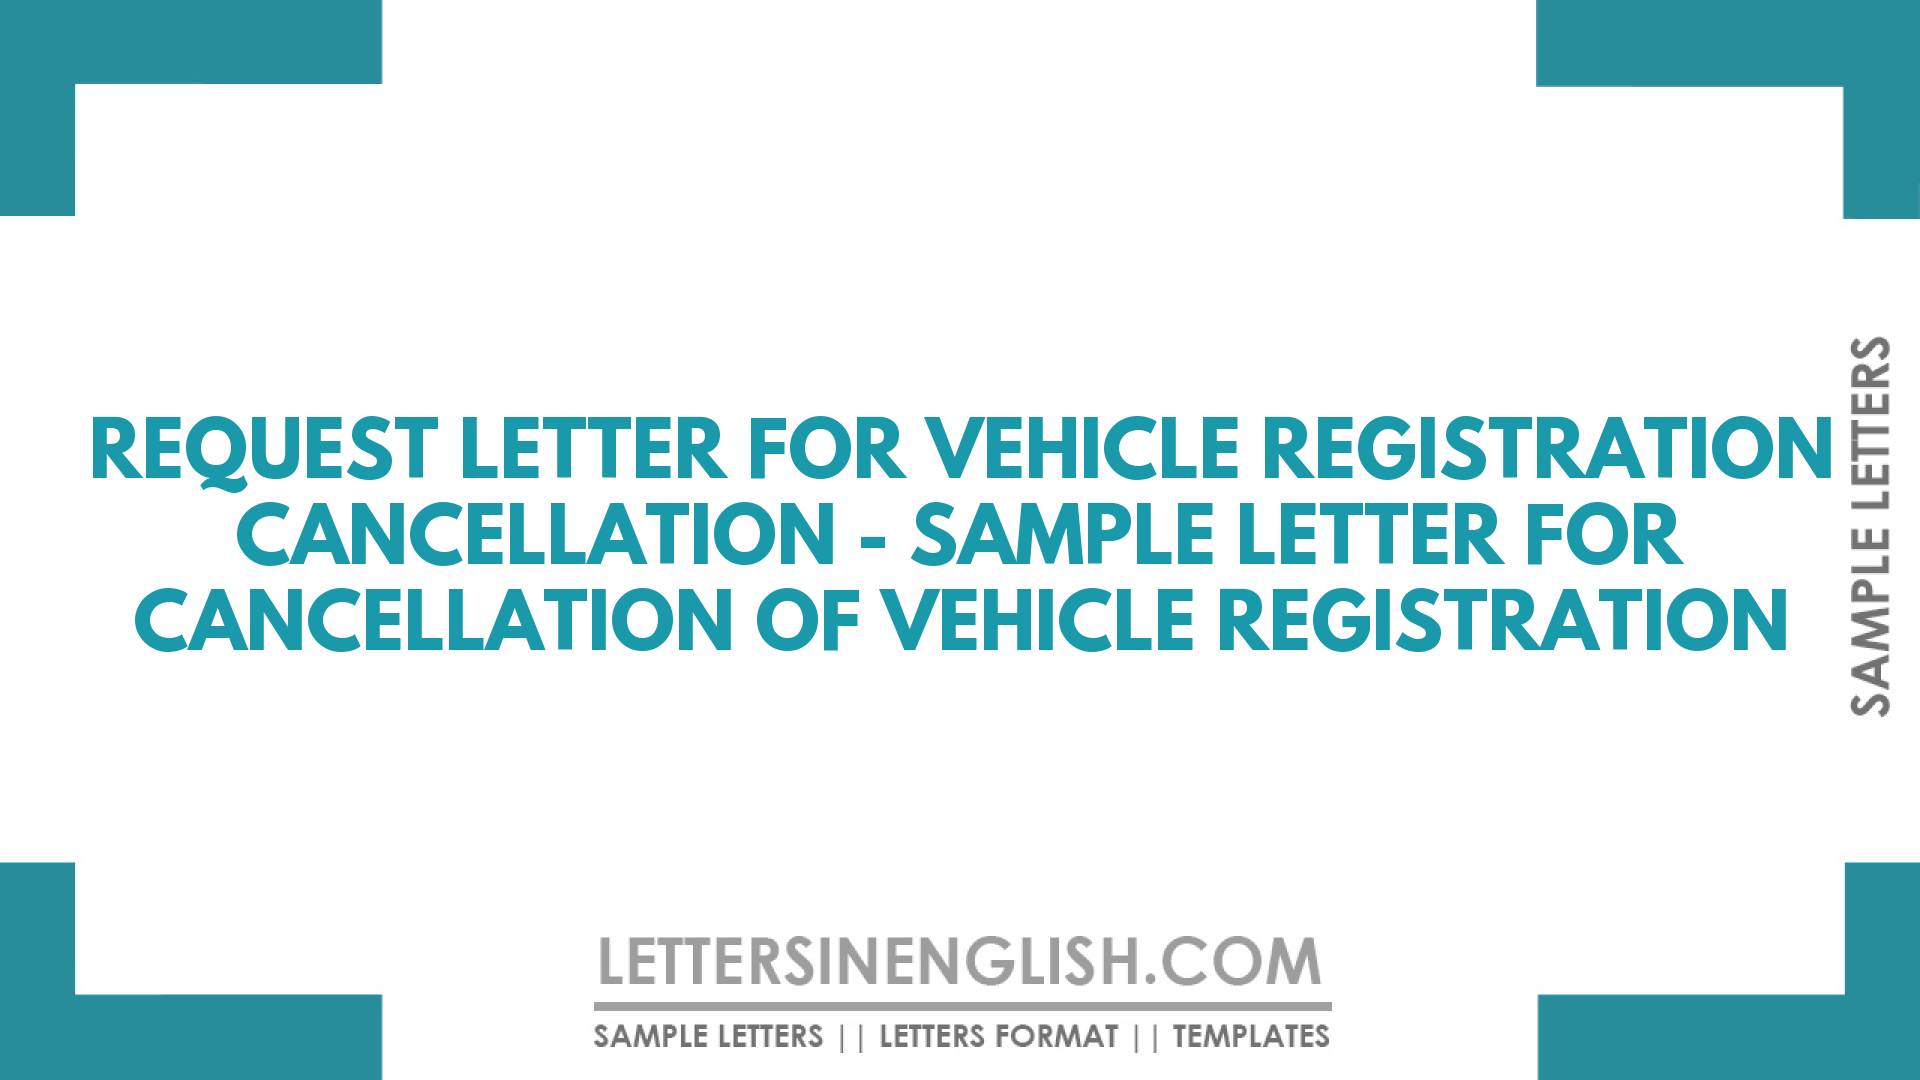 Request Letter for Vehicle Registration Cancellation Sample Letter